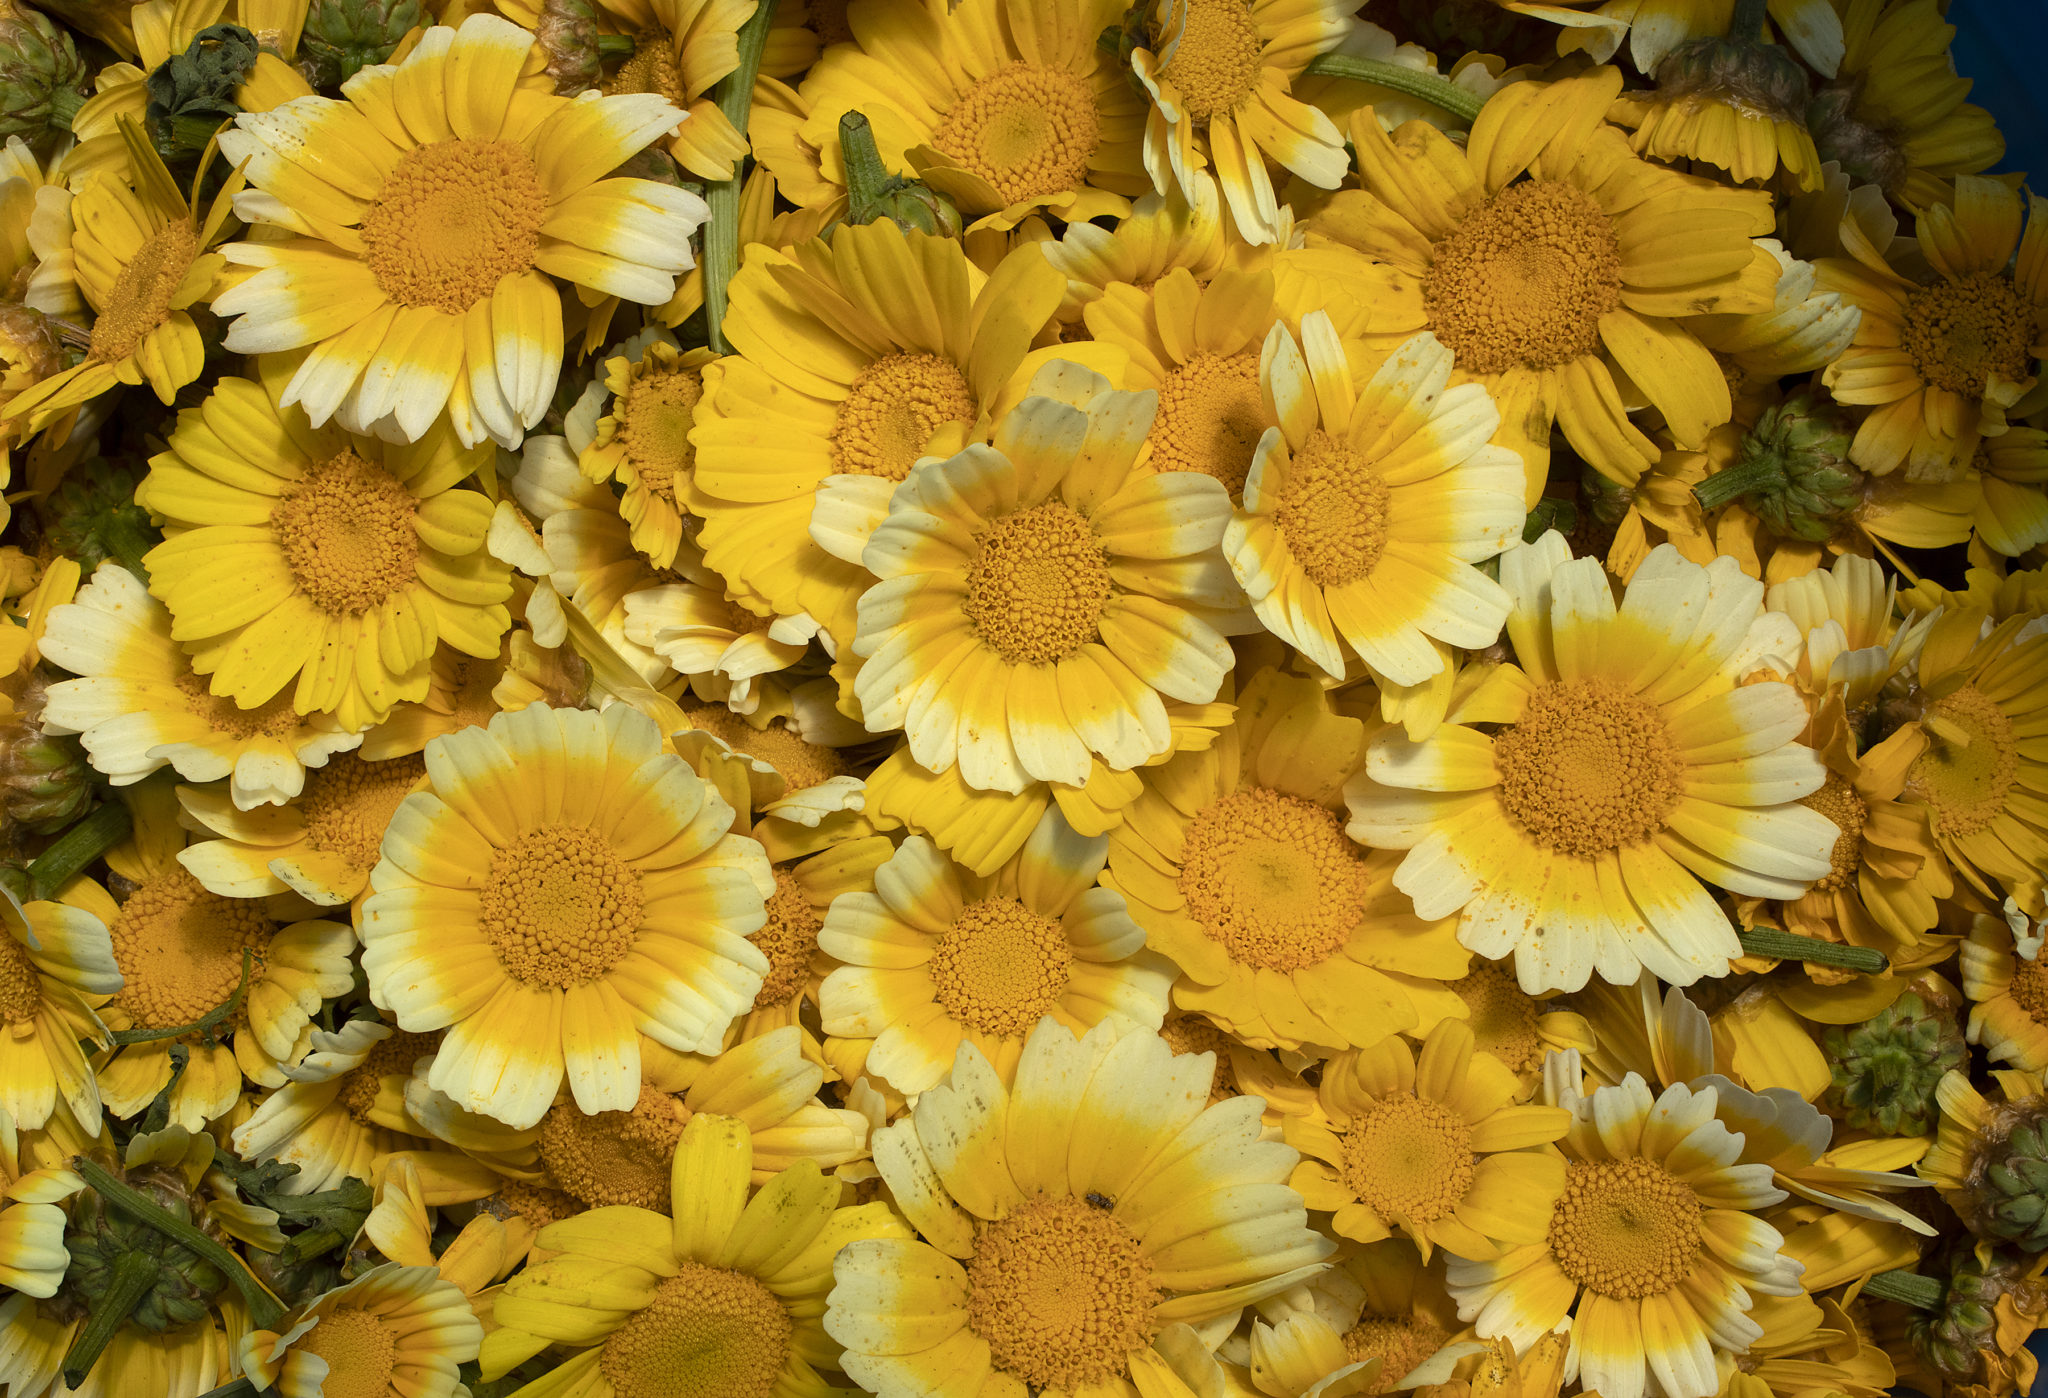 Chrysanthemum, Radical Family Farms in Sebastopol. (John Burgess/The Press Democrat)